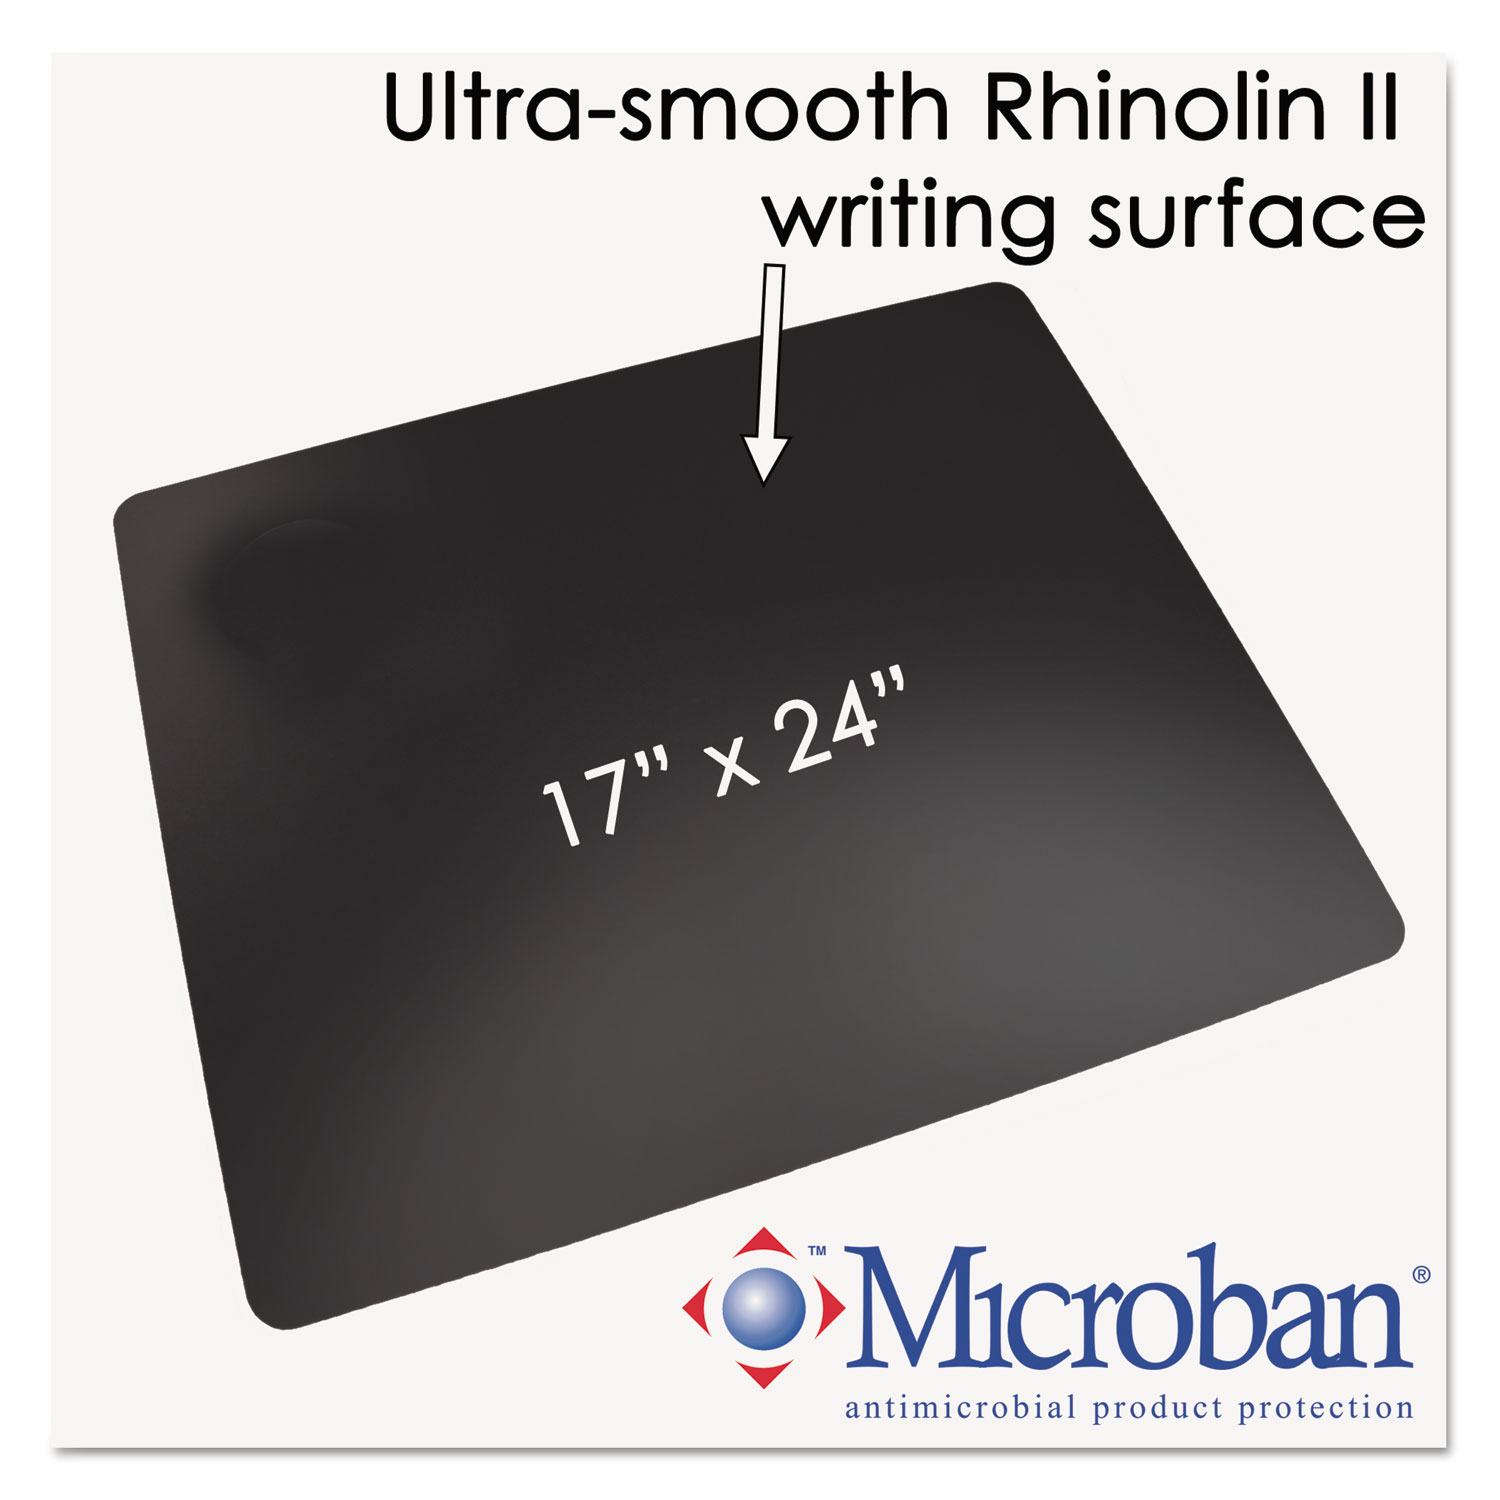 Rhinolin II Desk Pad with Microban, 24 x 17, Black